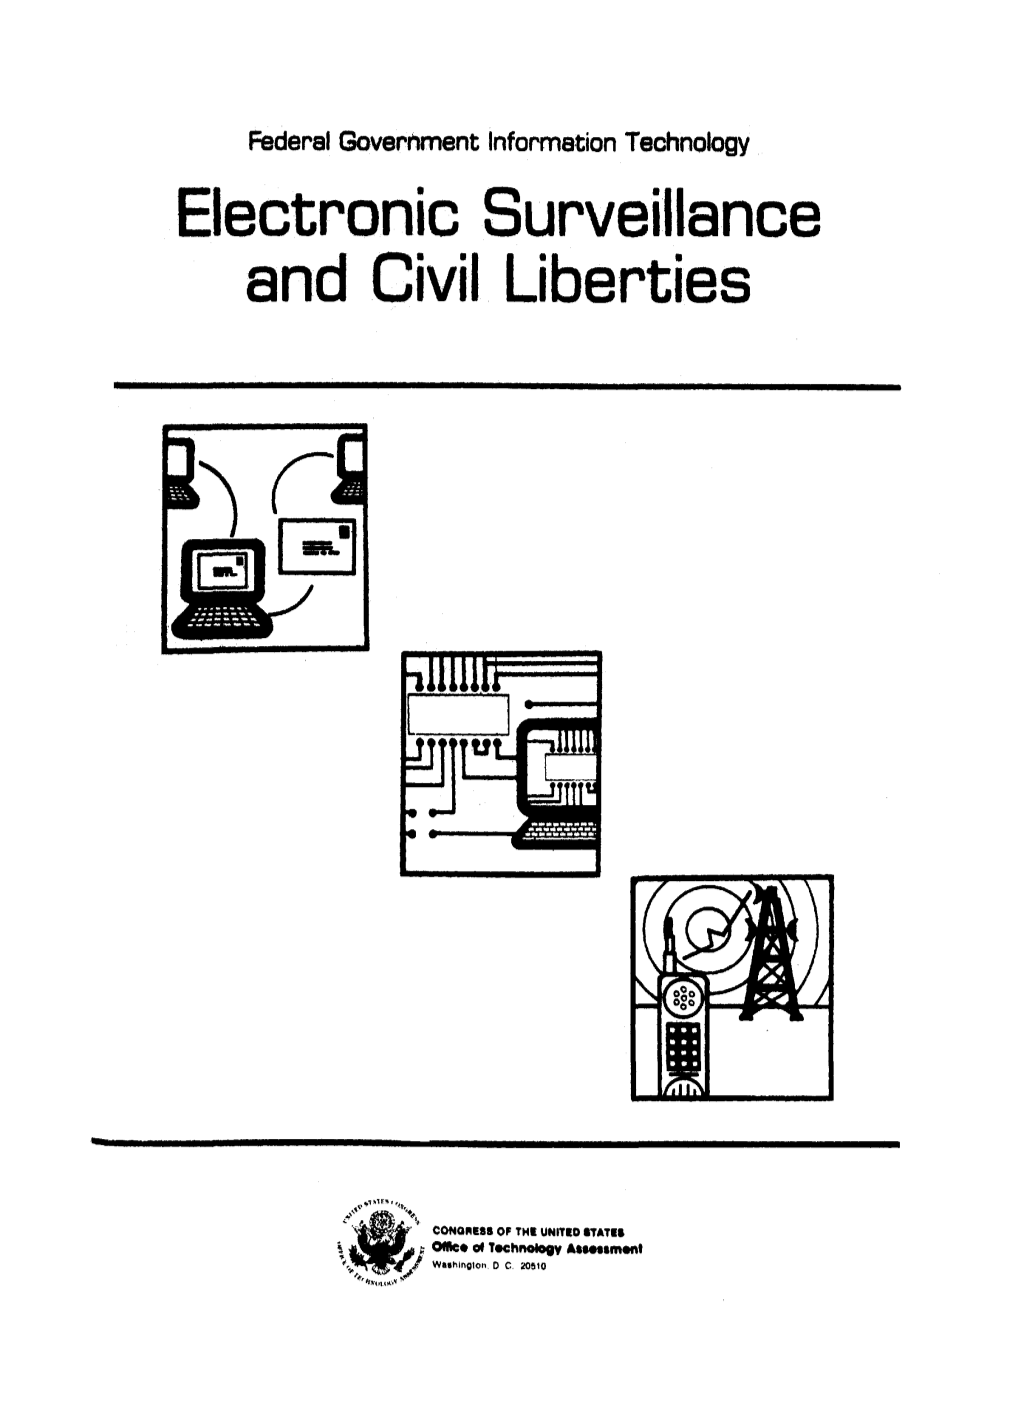 Electronic Surveillance and Civil Liberties